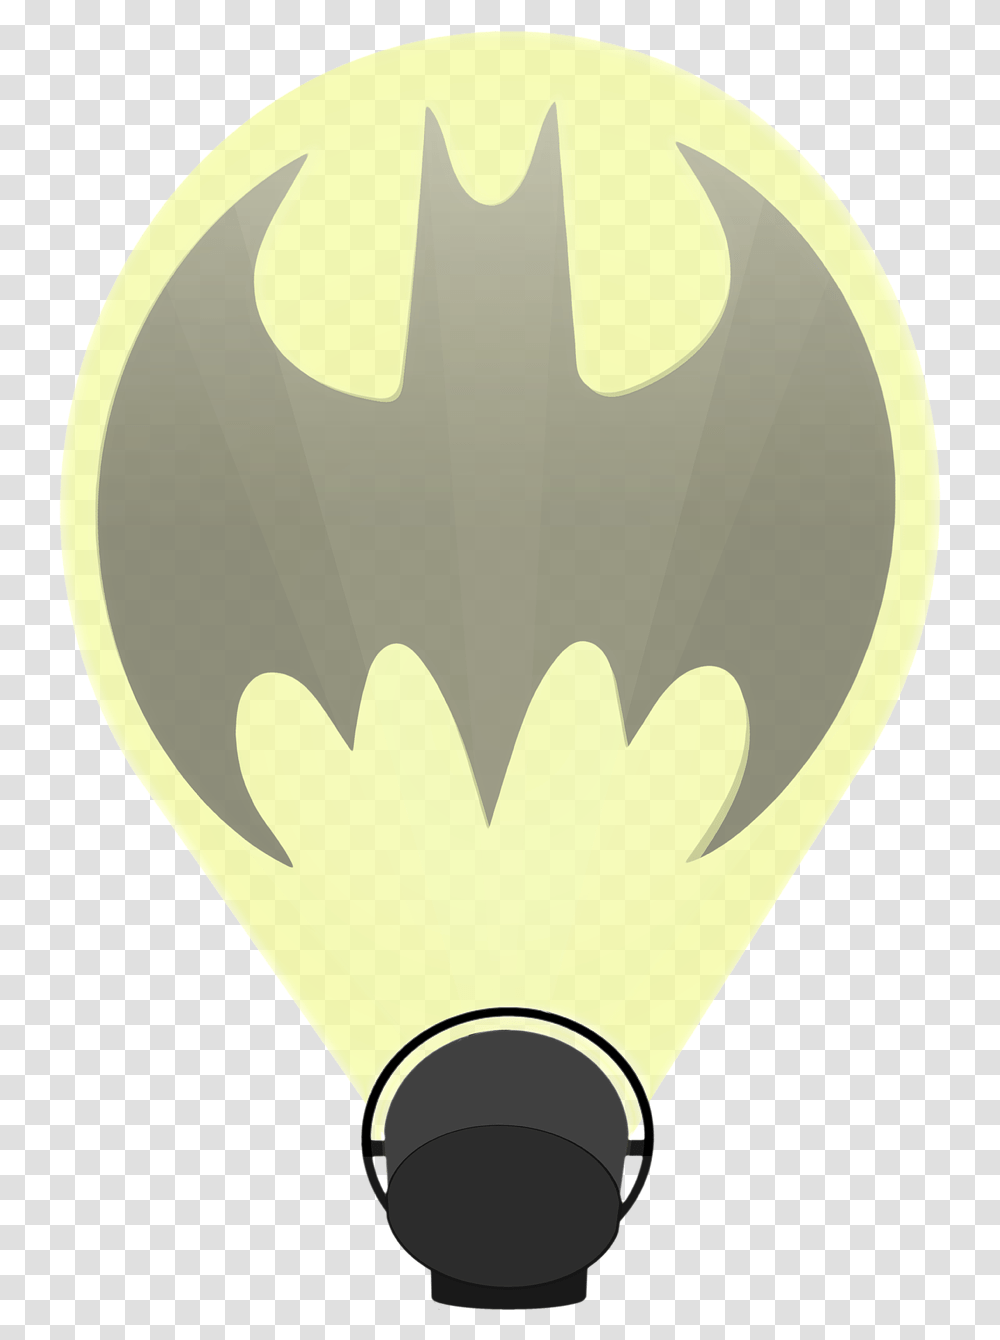 Graphic Batman Bat Signal Free Photo Superhero Pins, Hot Air Balloon, Aircraft, Vehicle, Transportation Transparent Png